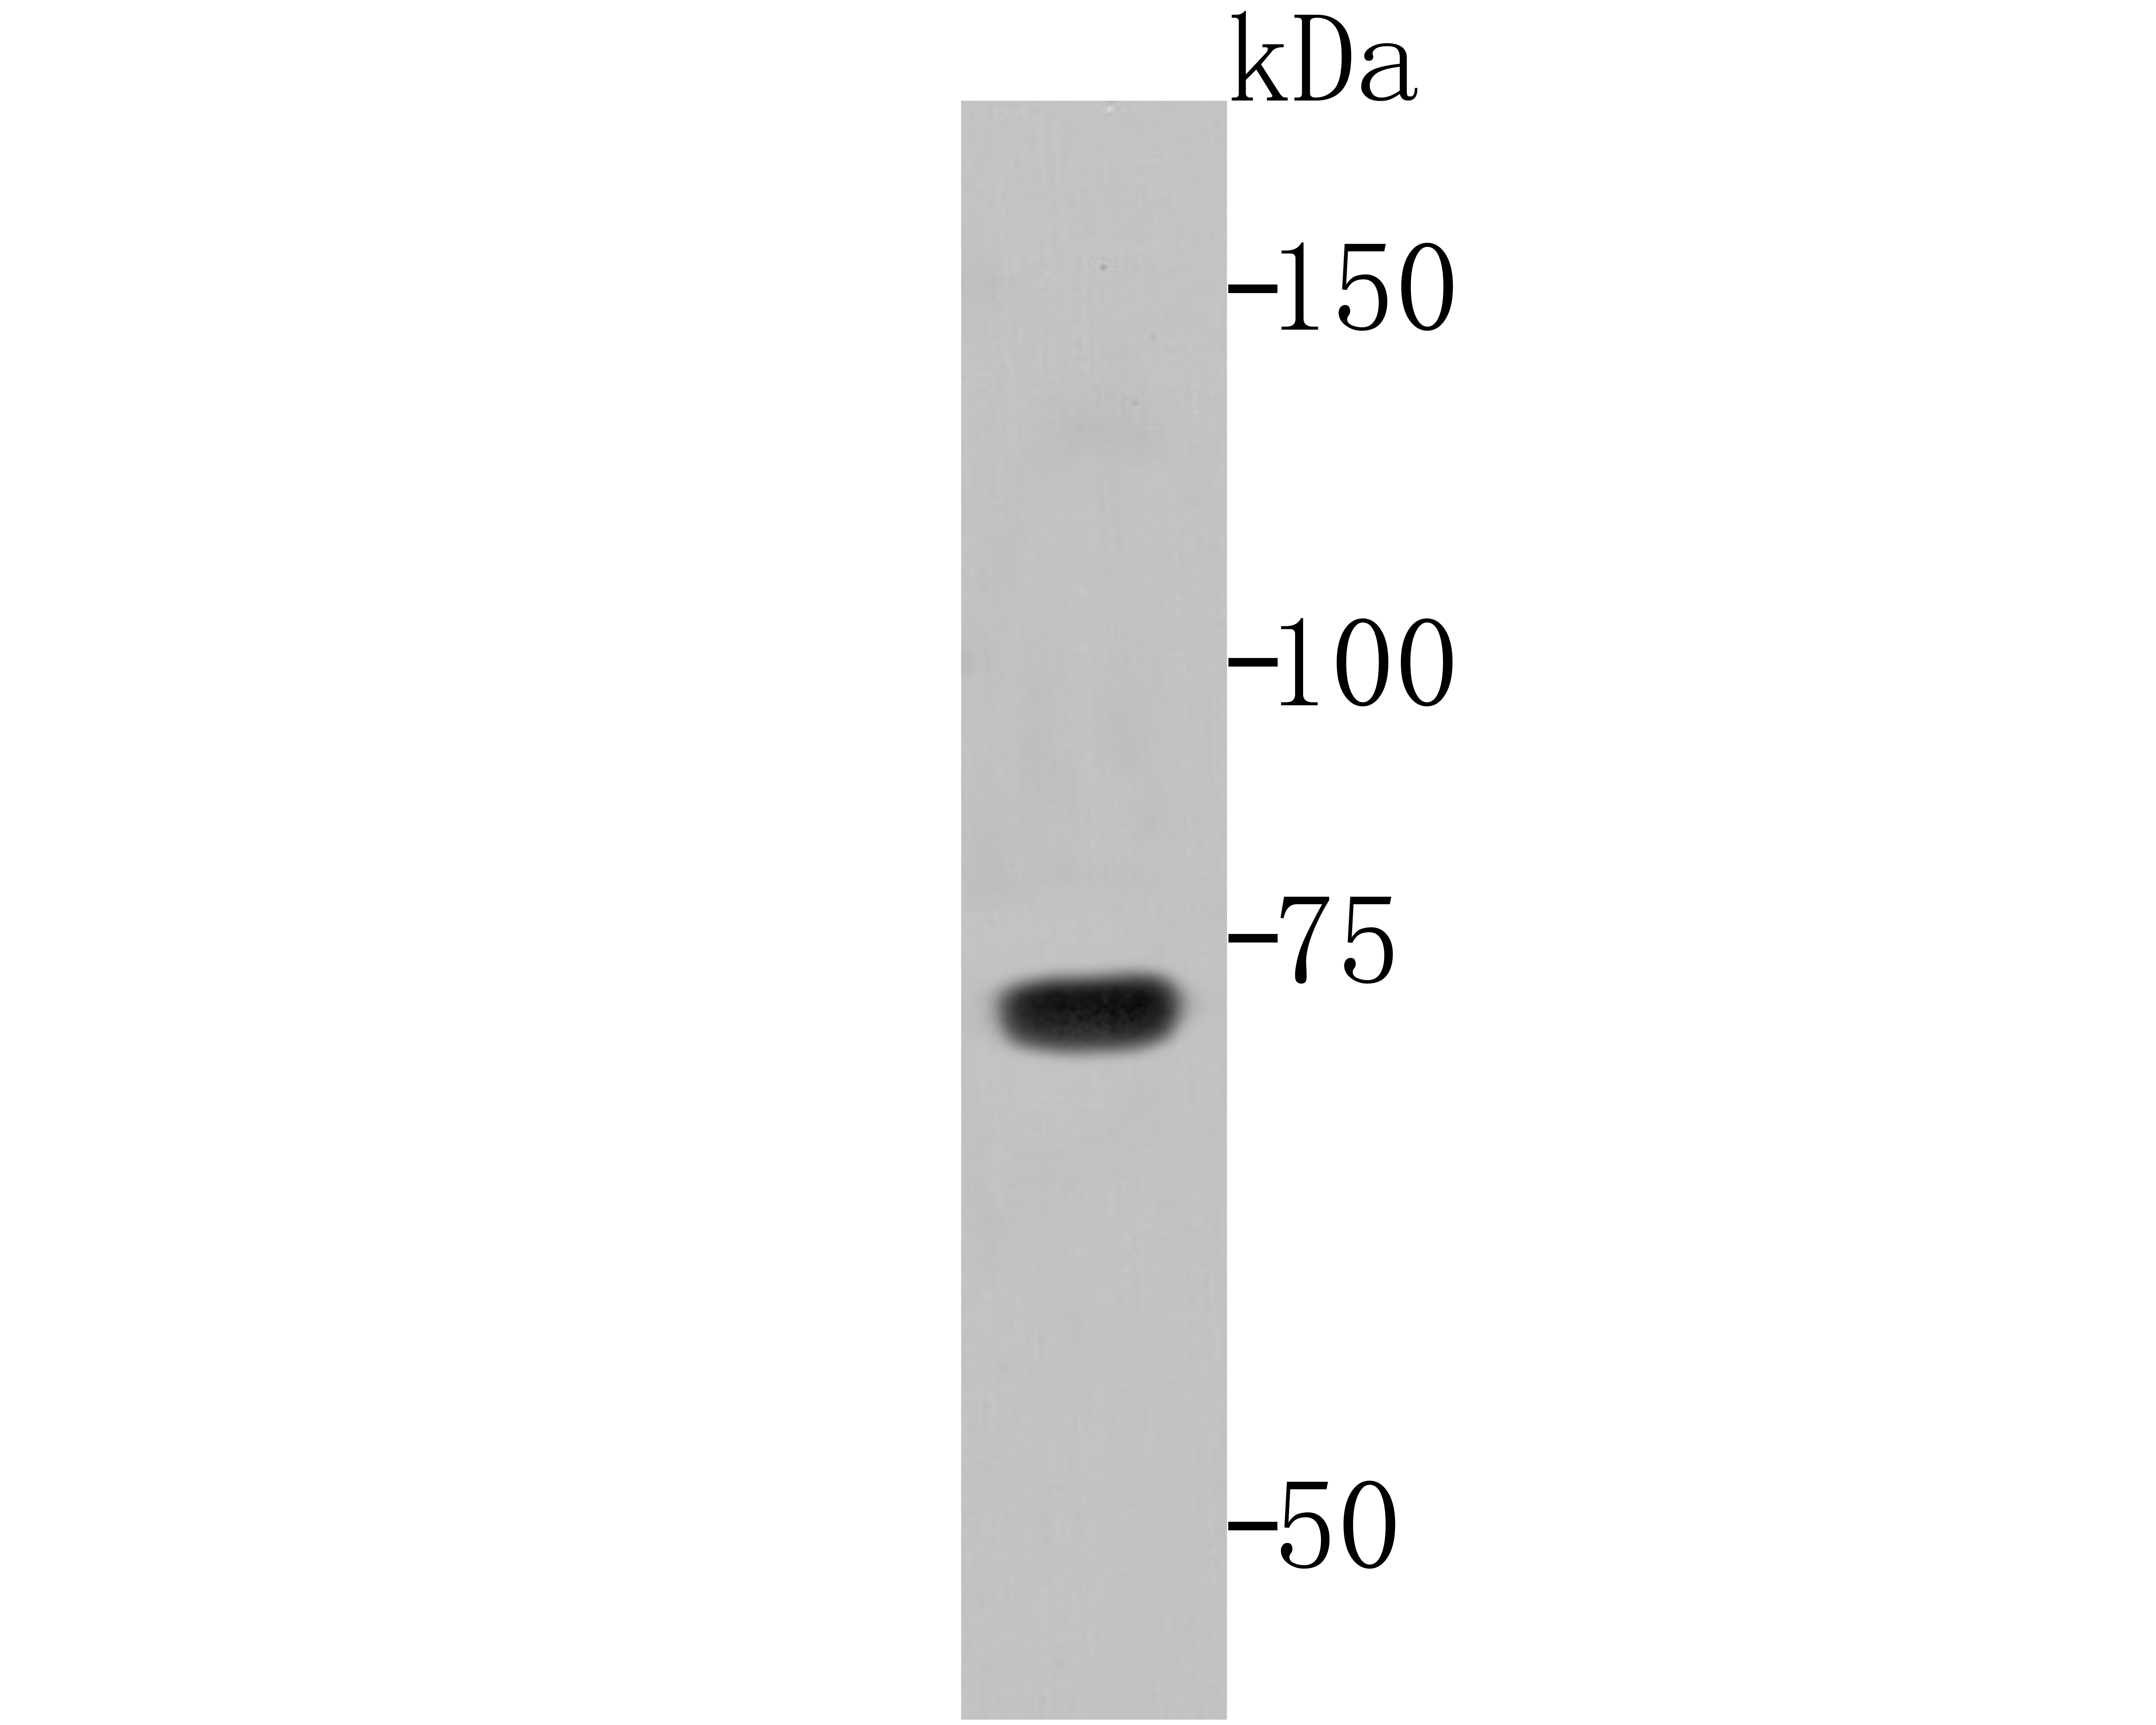 Western blot analysis of Hemagglutinin  Neuraminidase on Hemagglutinin Neuraminidase transfected HEK293 cell lysates using anti- Hemagglutinin Neuraminidase antibody at 1/500 dilution.